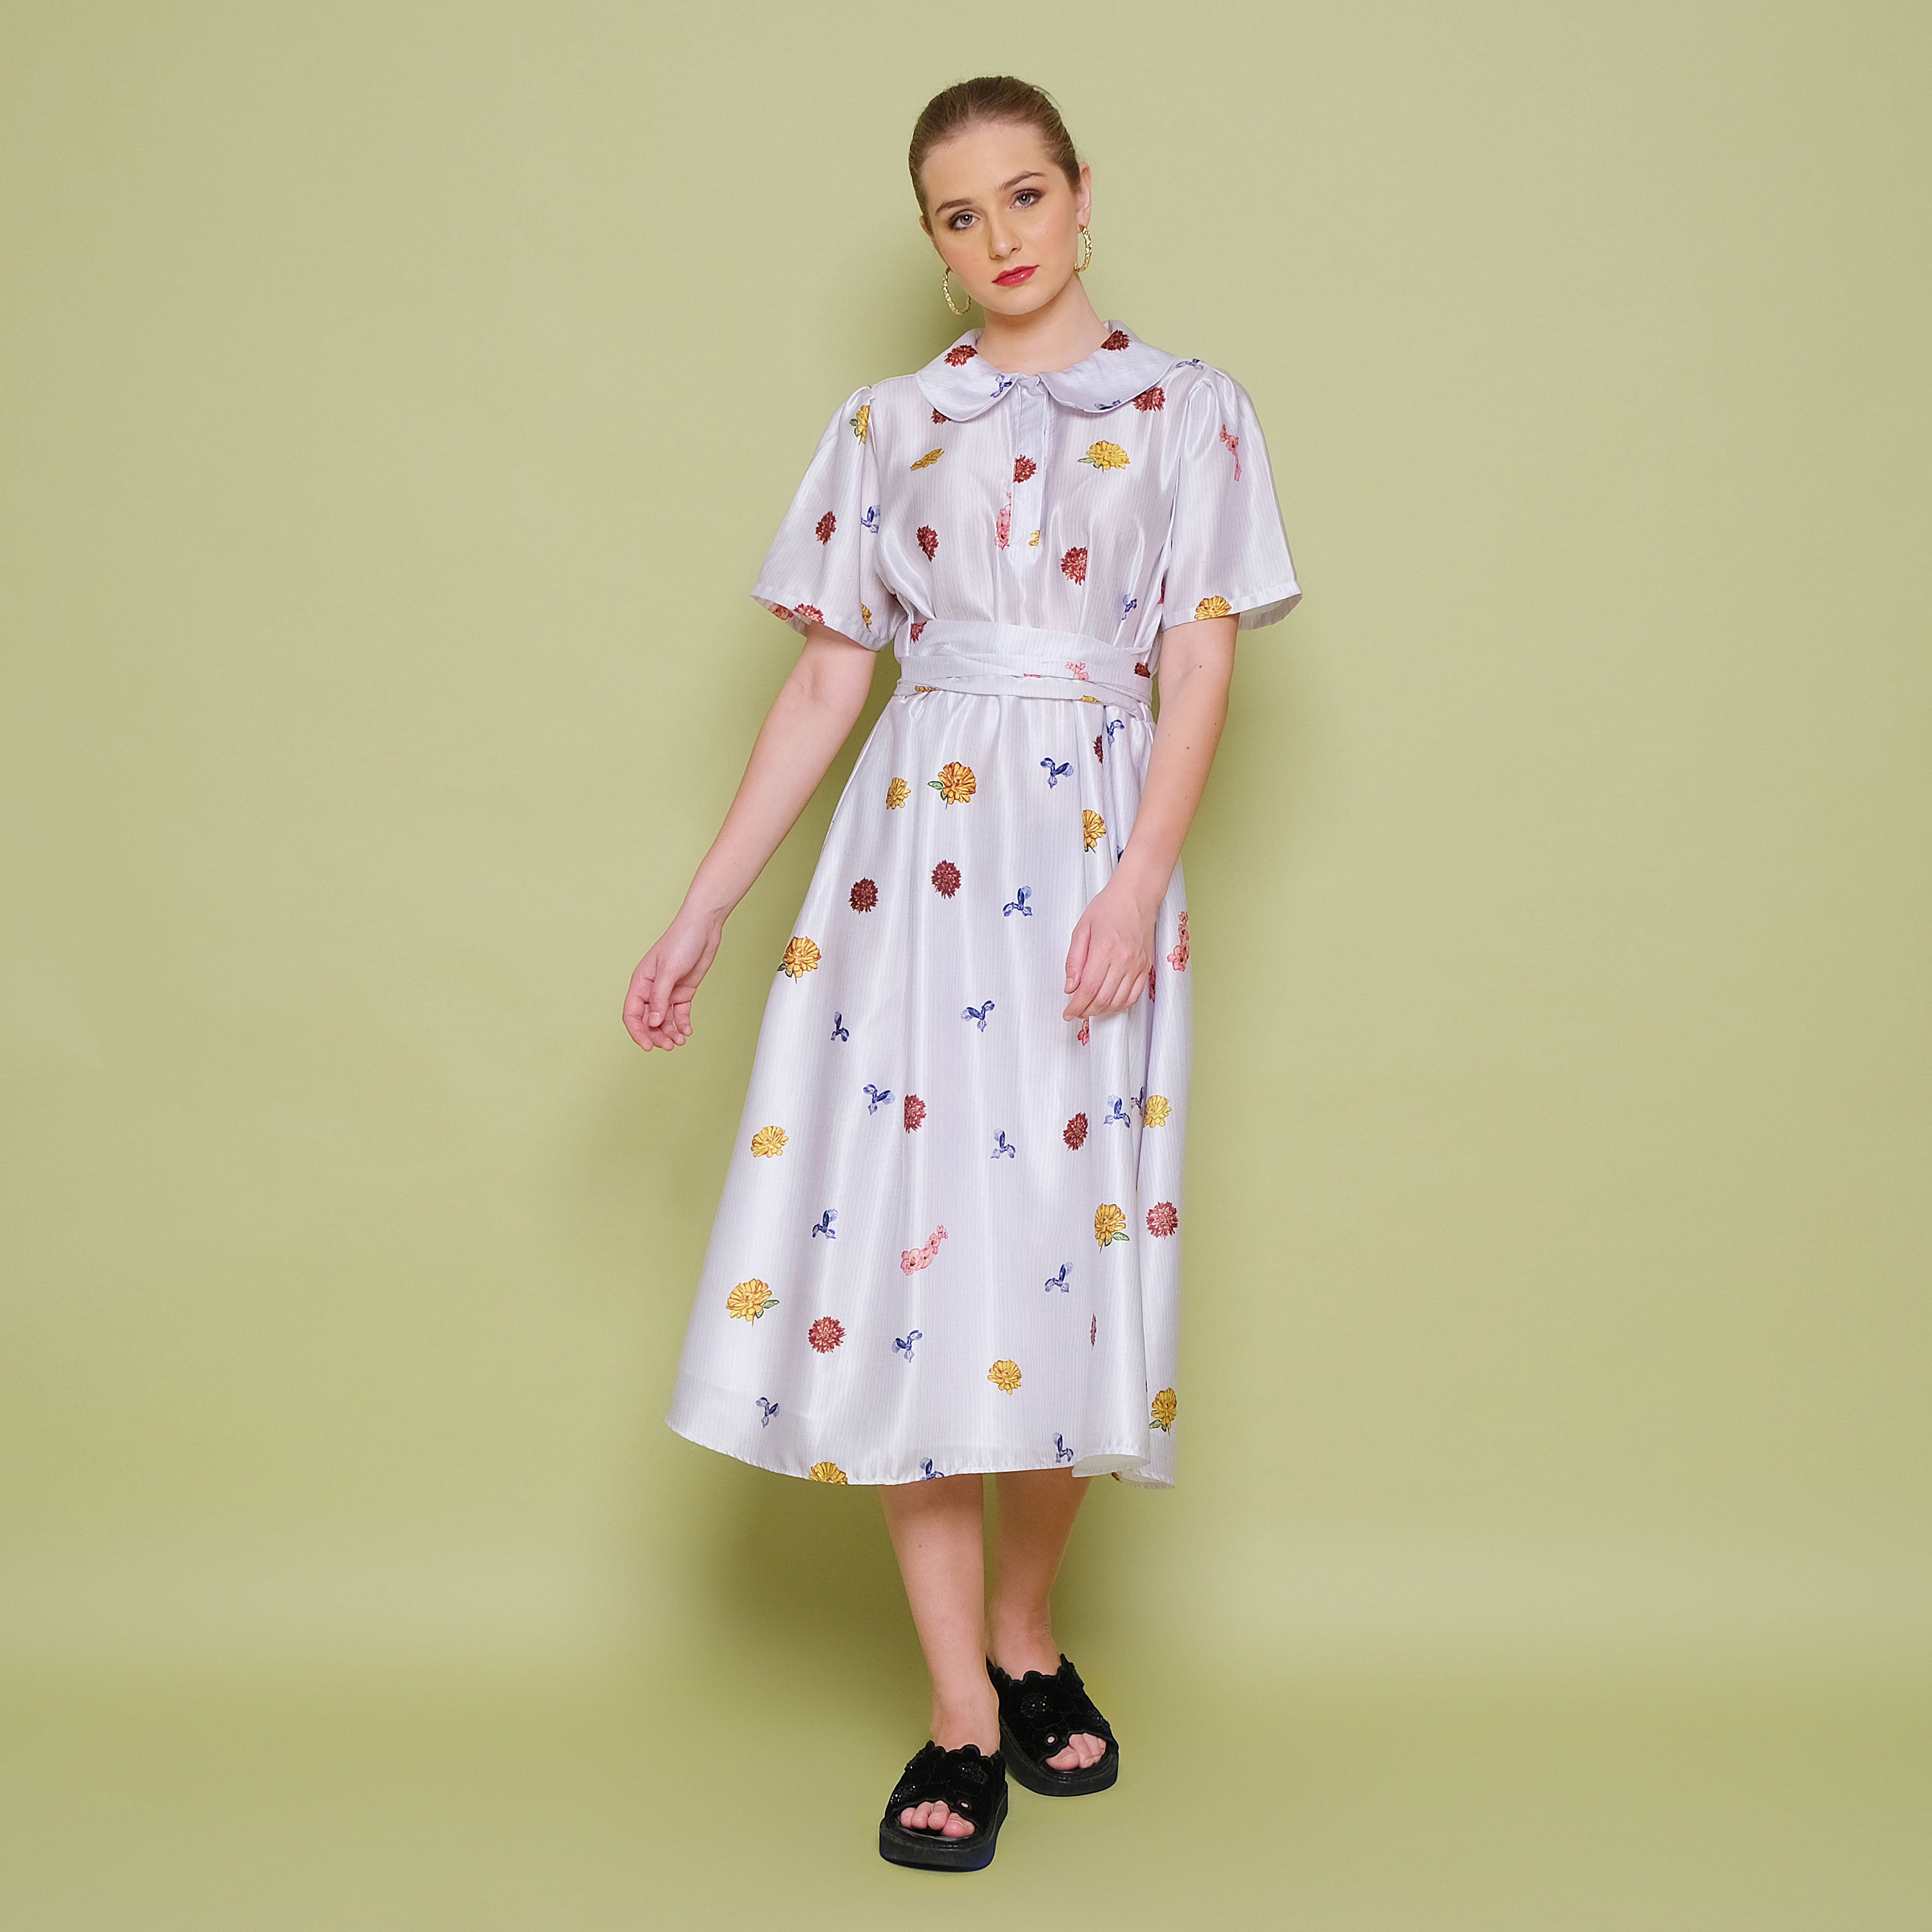 Fleurine Sateen Dress - PREORDER